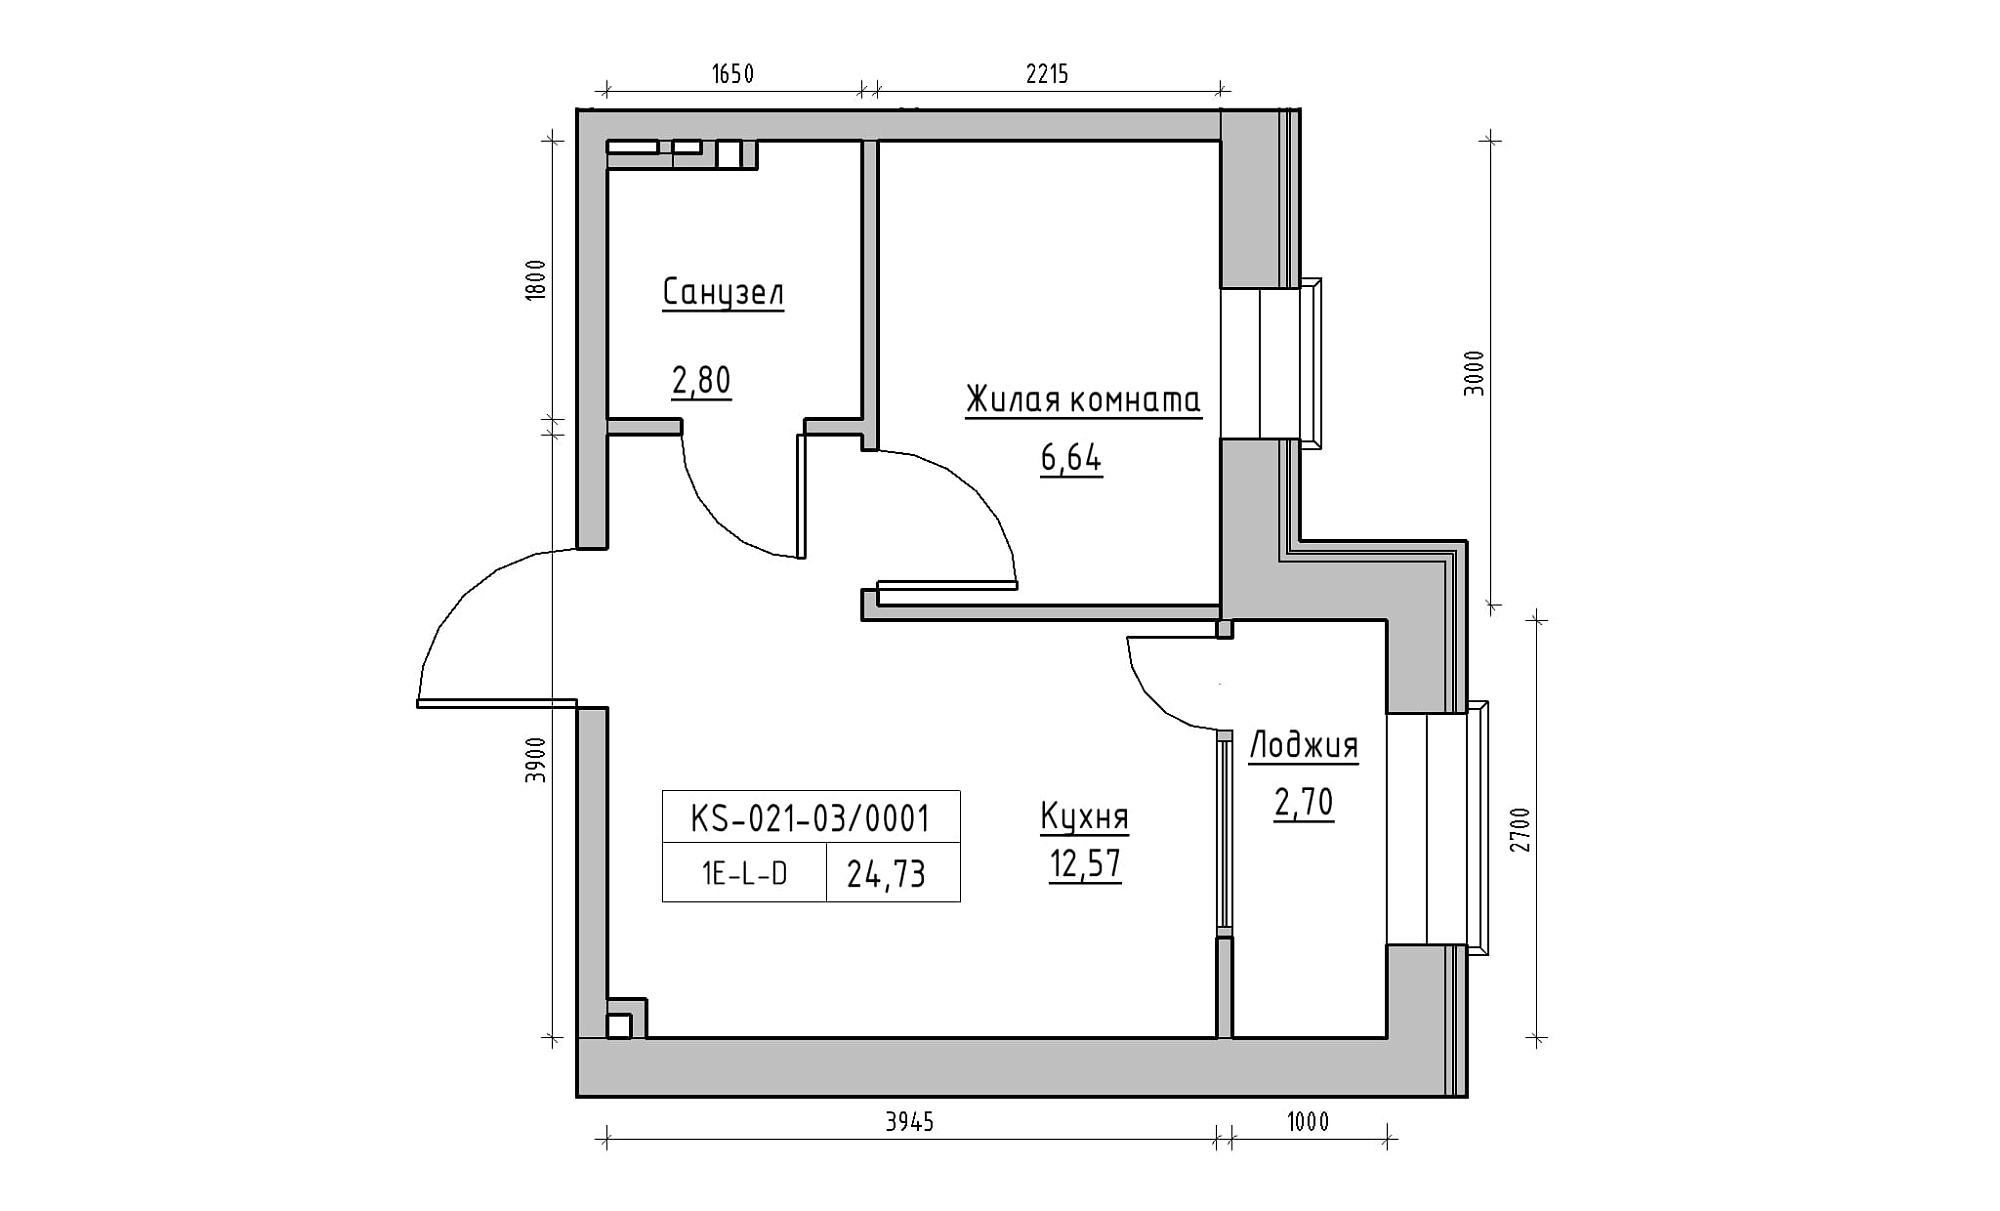 Planning 1-rm flats area 24.73m2, KS-021-03/0001.